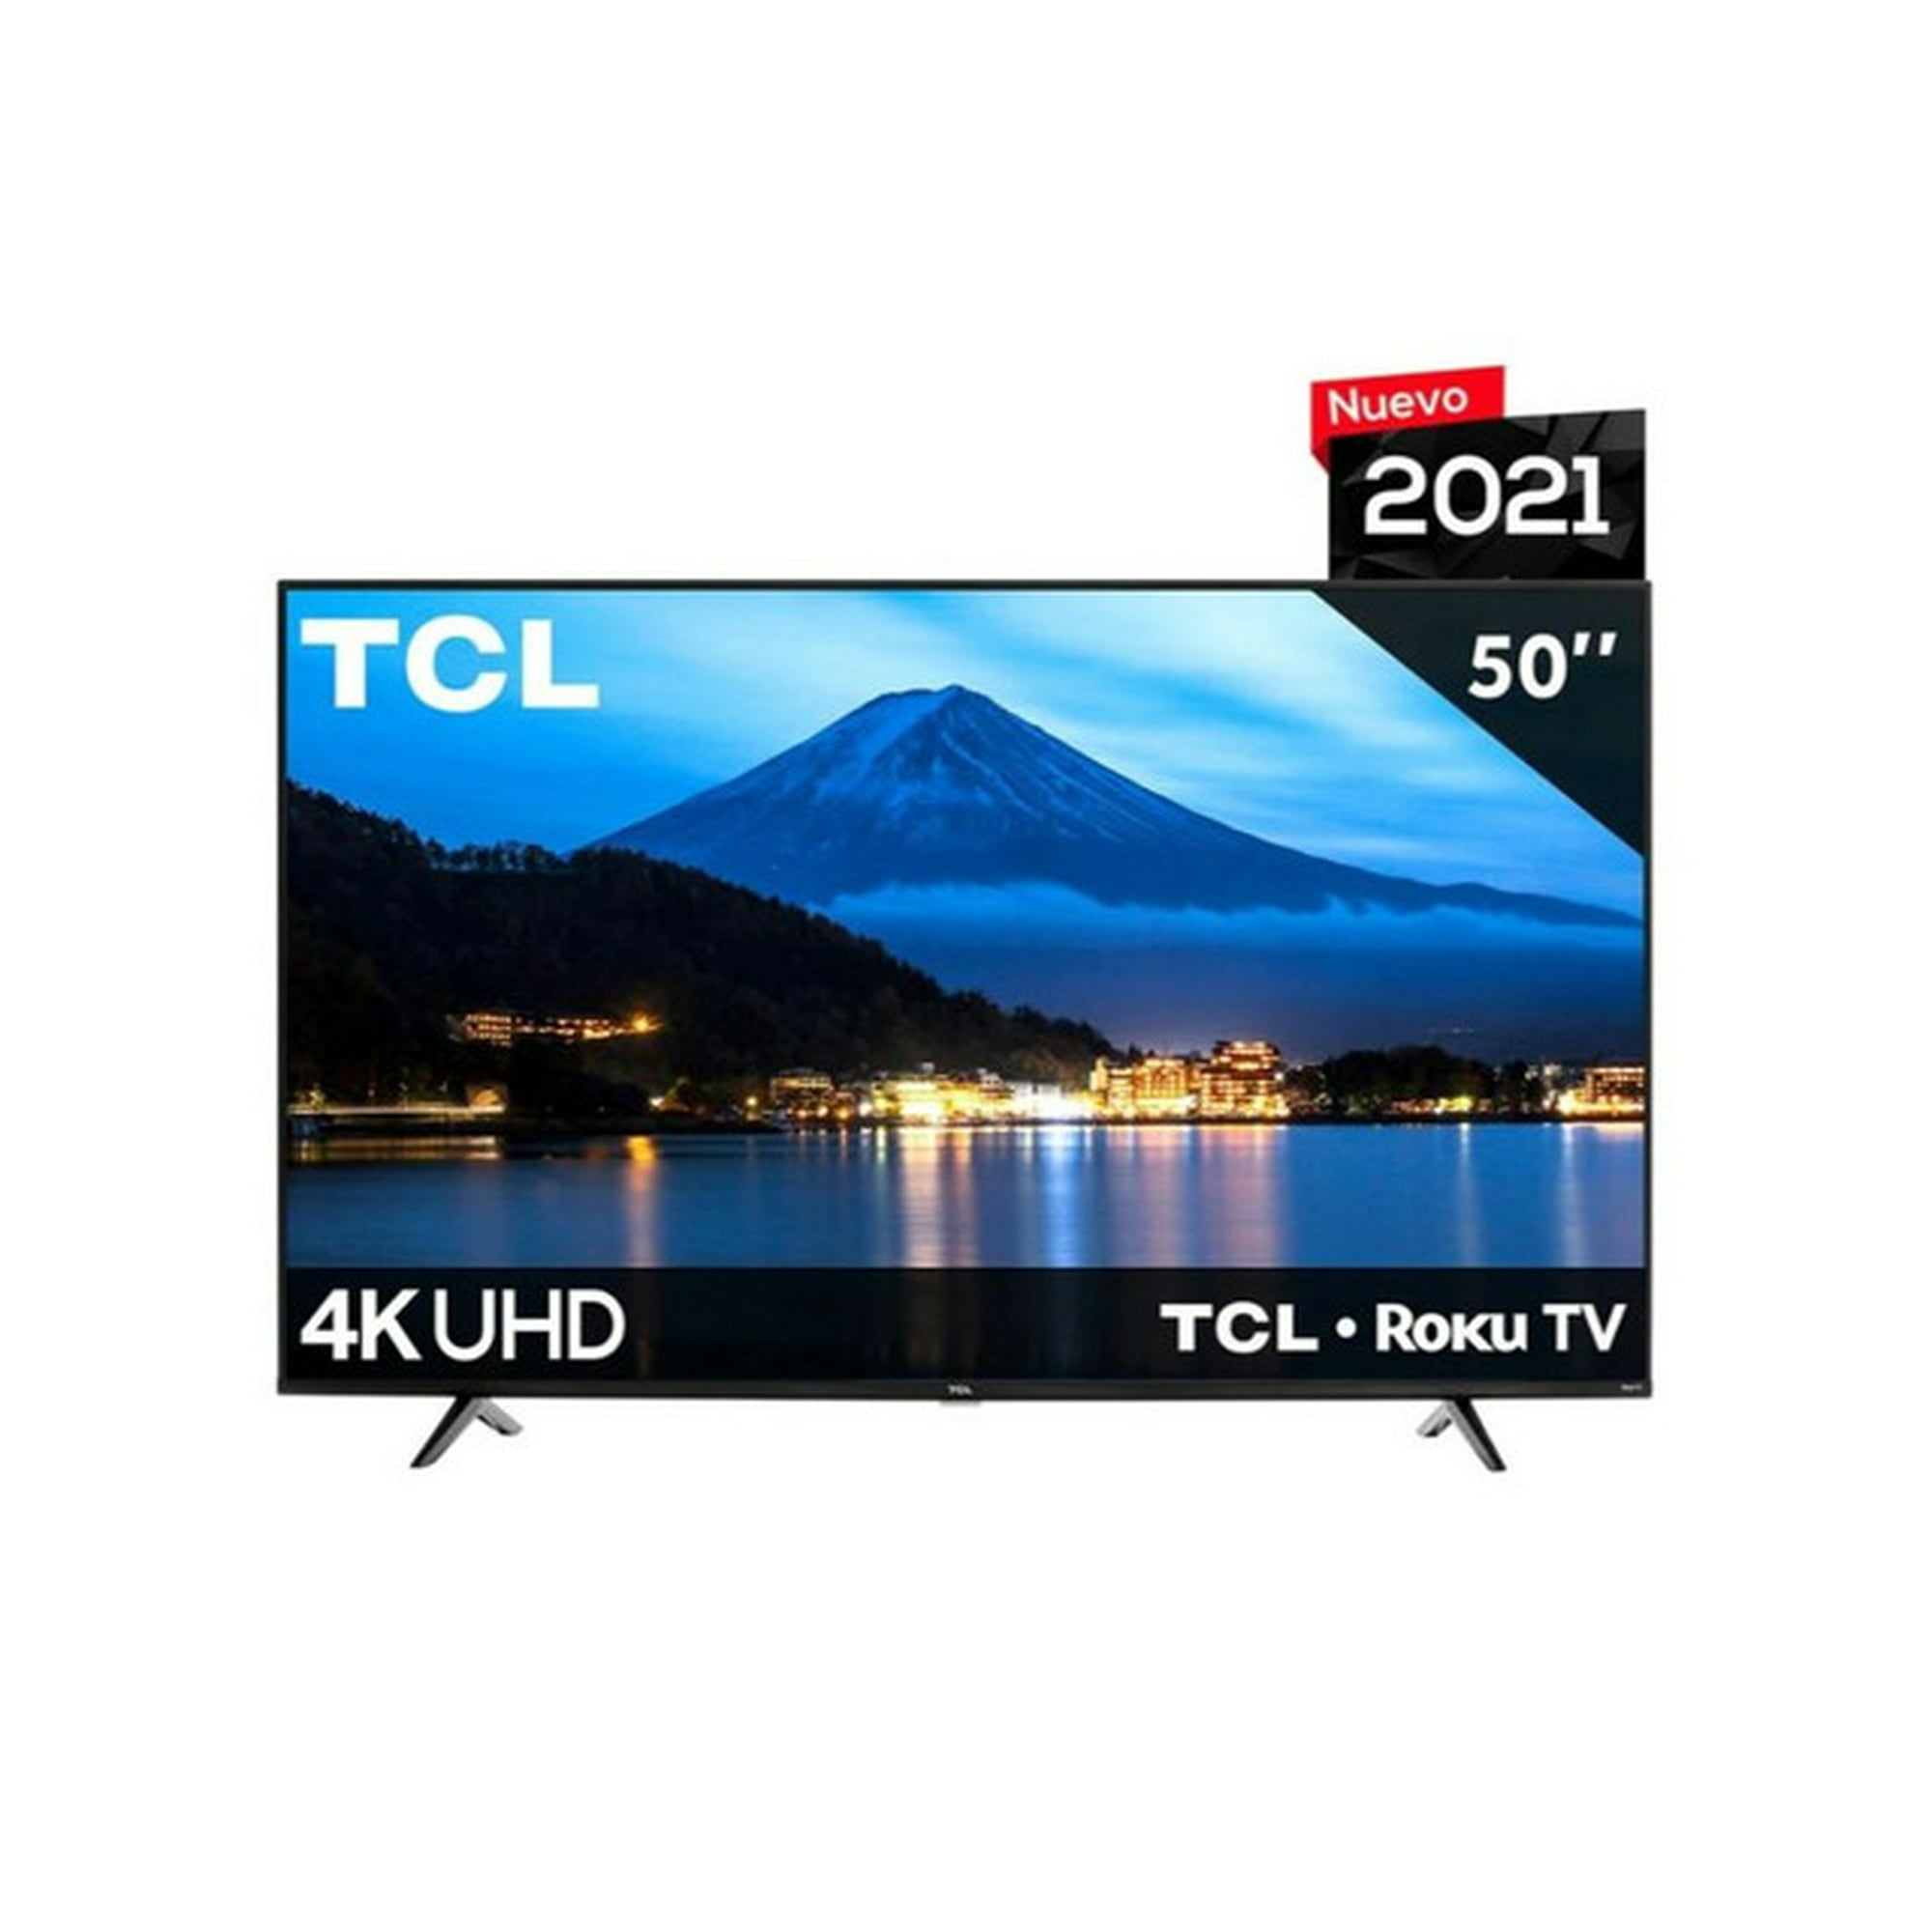 Smart TV Android TCL 32A343 LED HD 32 Pulgadas Asistente Voz